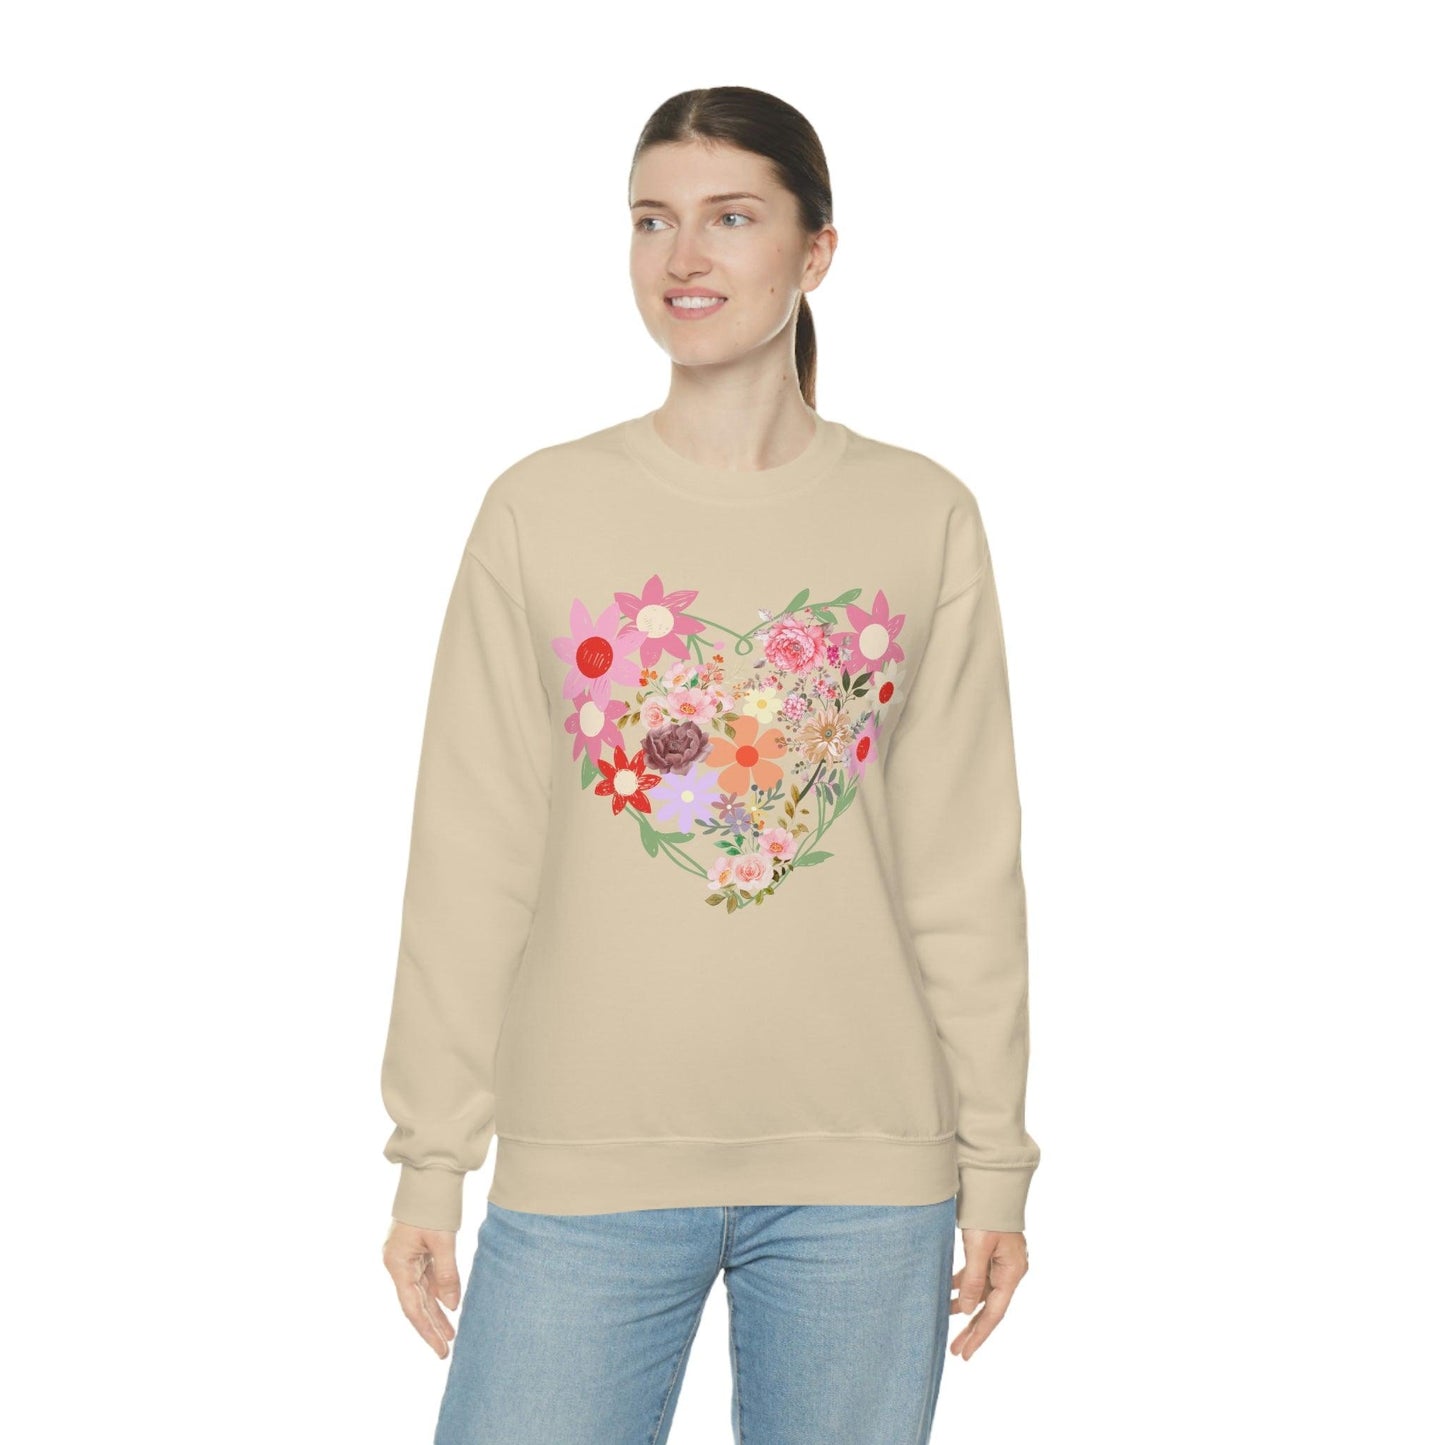 Flower Heart sweatshirt - Floral sweatshirt - Love Sweatshirt - Giftsmojo